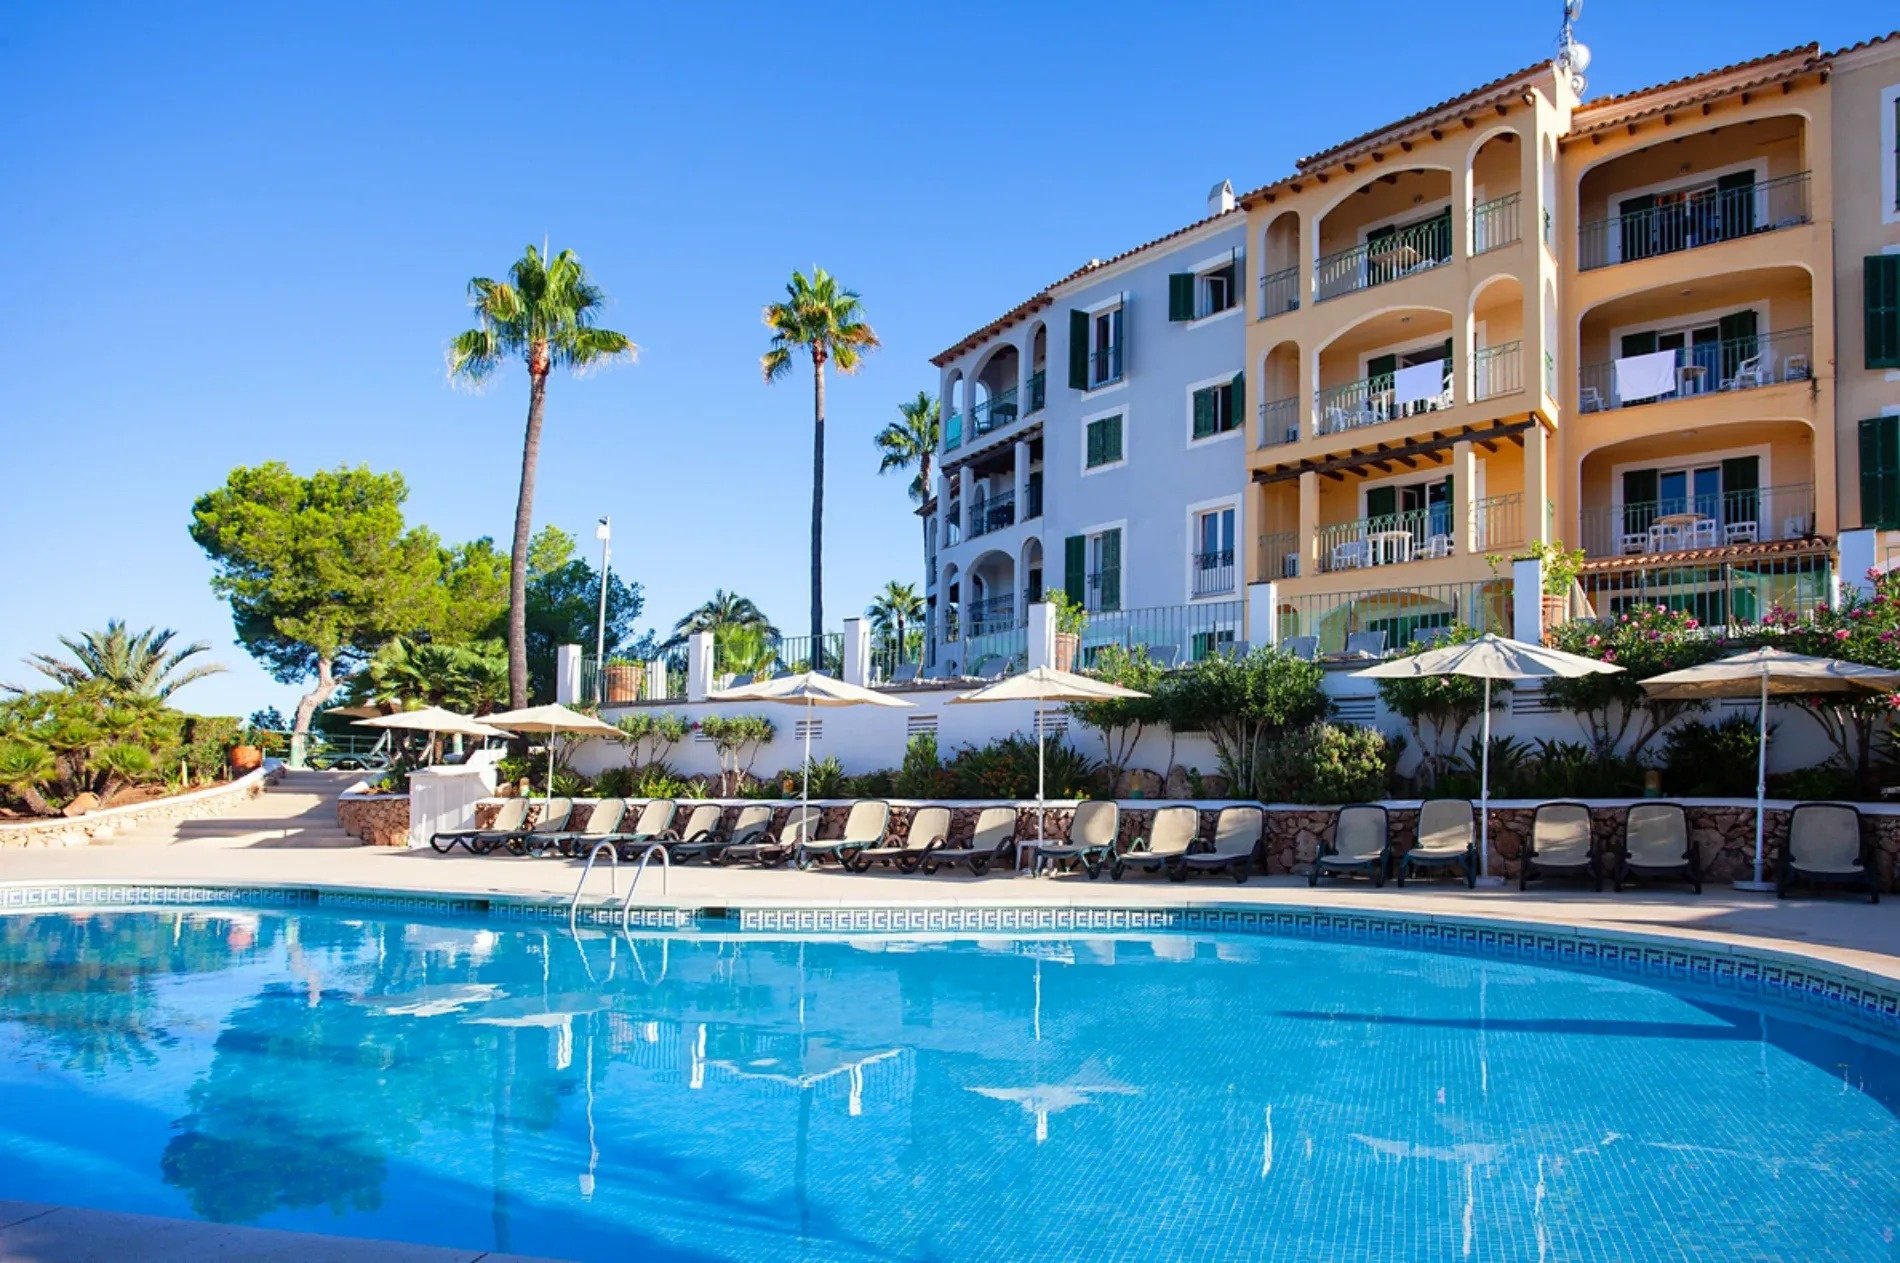 Outdoor pool of the Ona Cala Pi hotel, in Mallorca